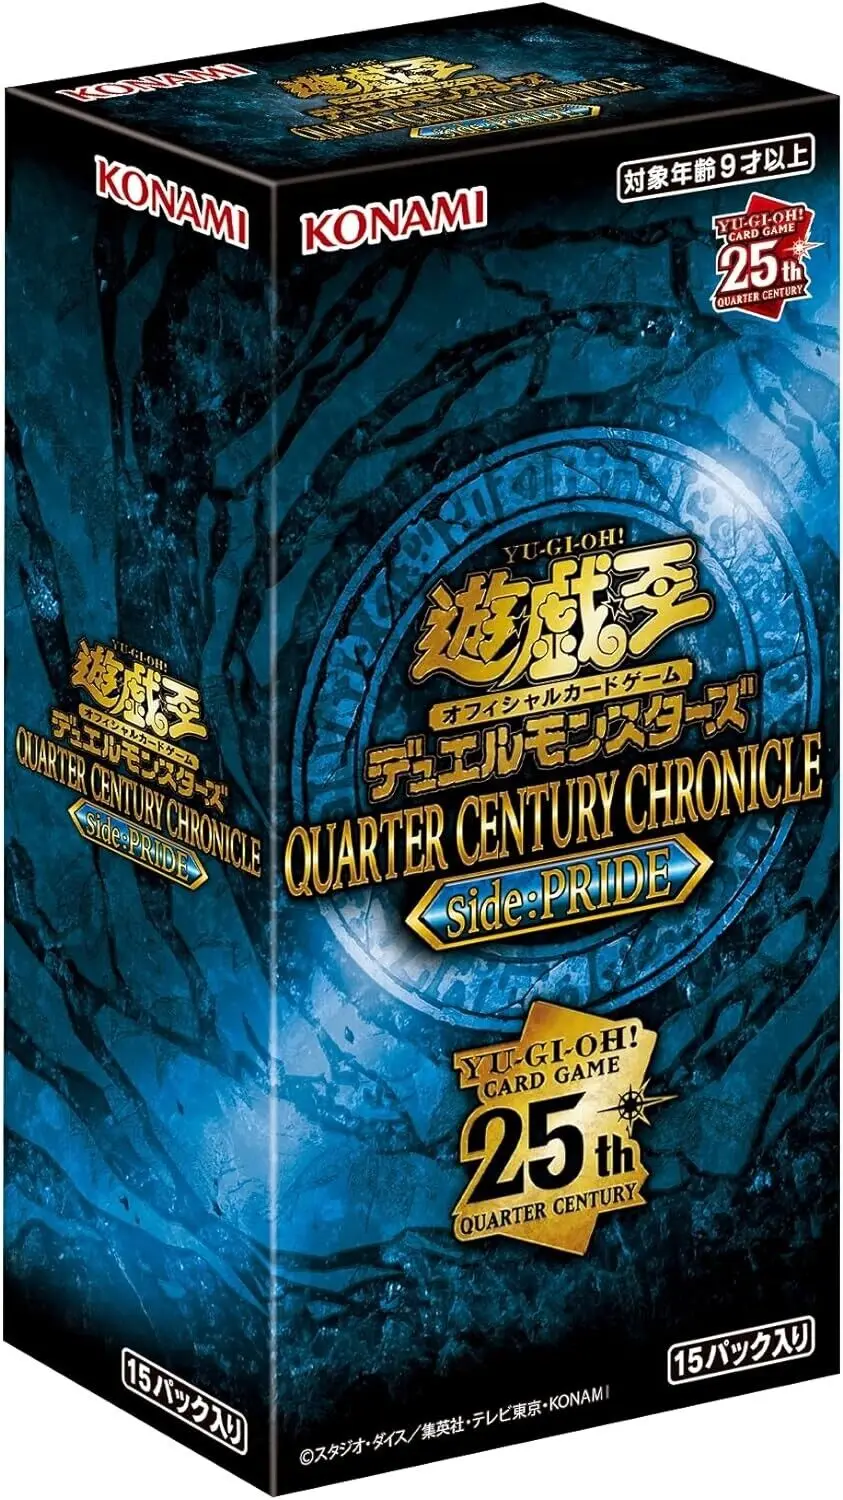 Yu-Gi-Oh Duel Monsters QUARTER CENTURY CHRONICLE side:PRIDE Box Sealed Japanese